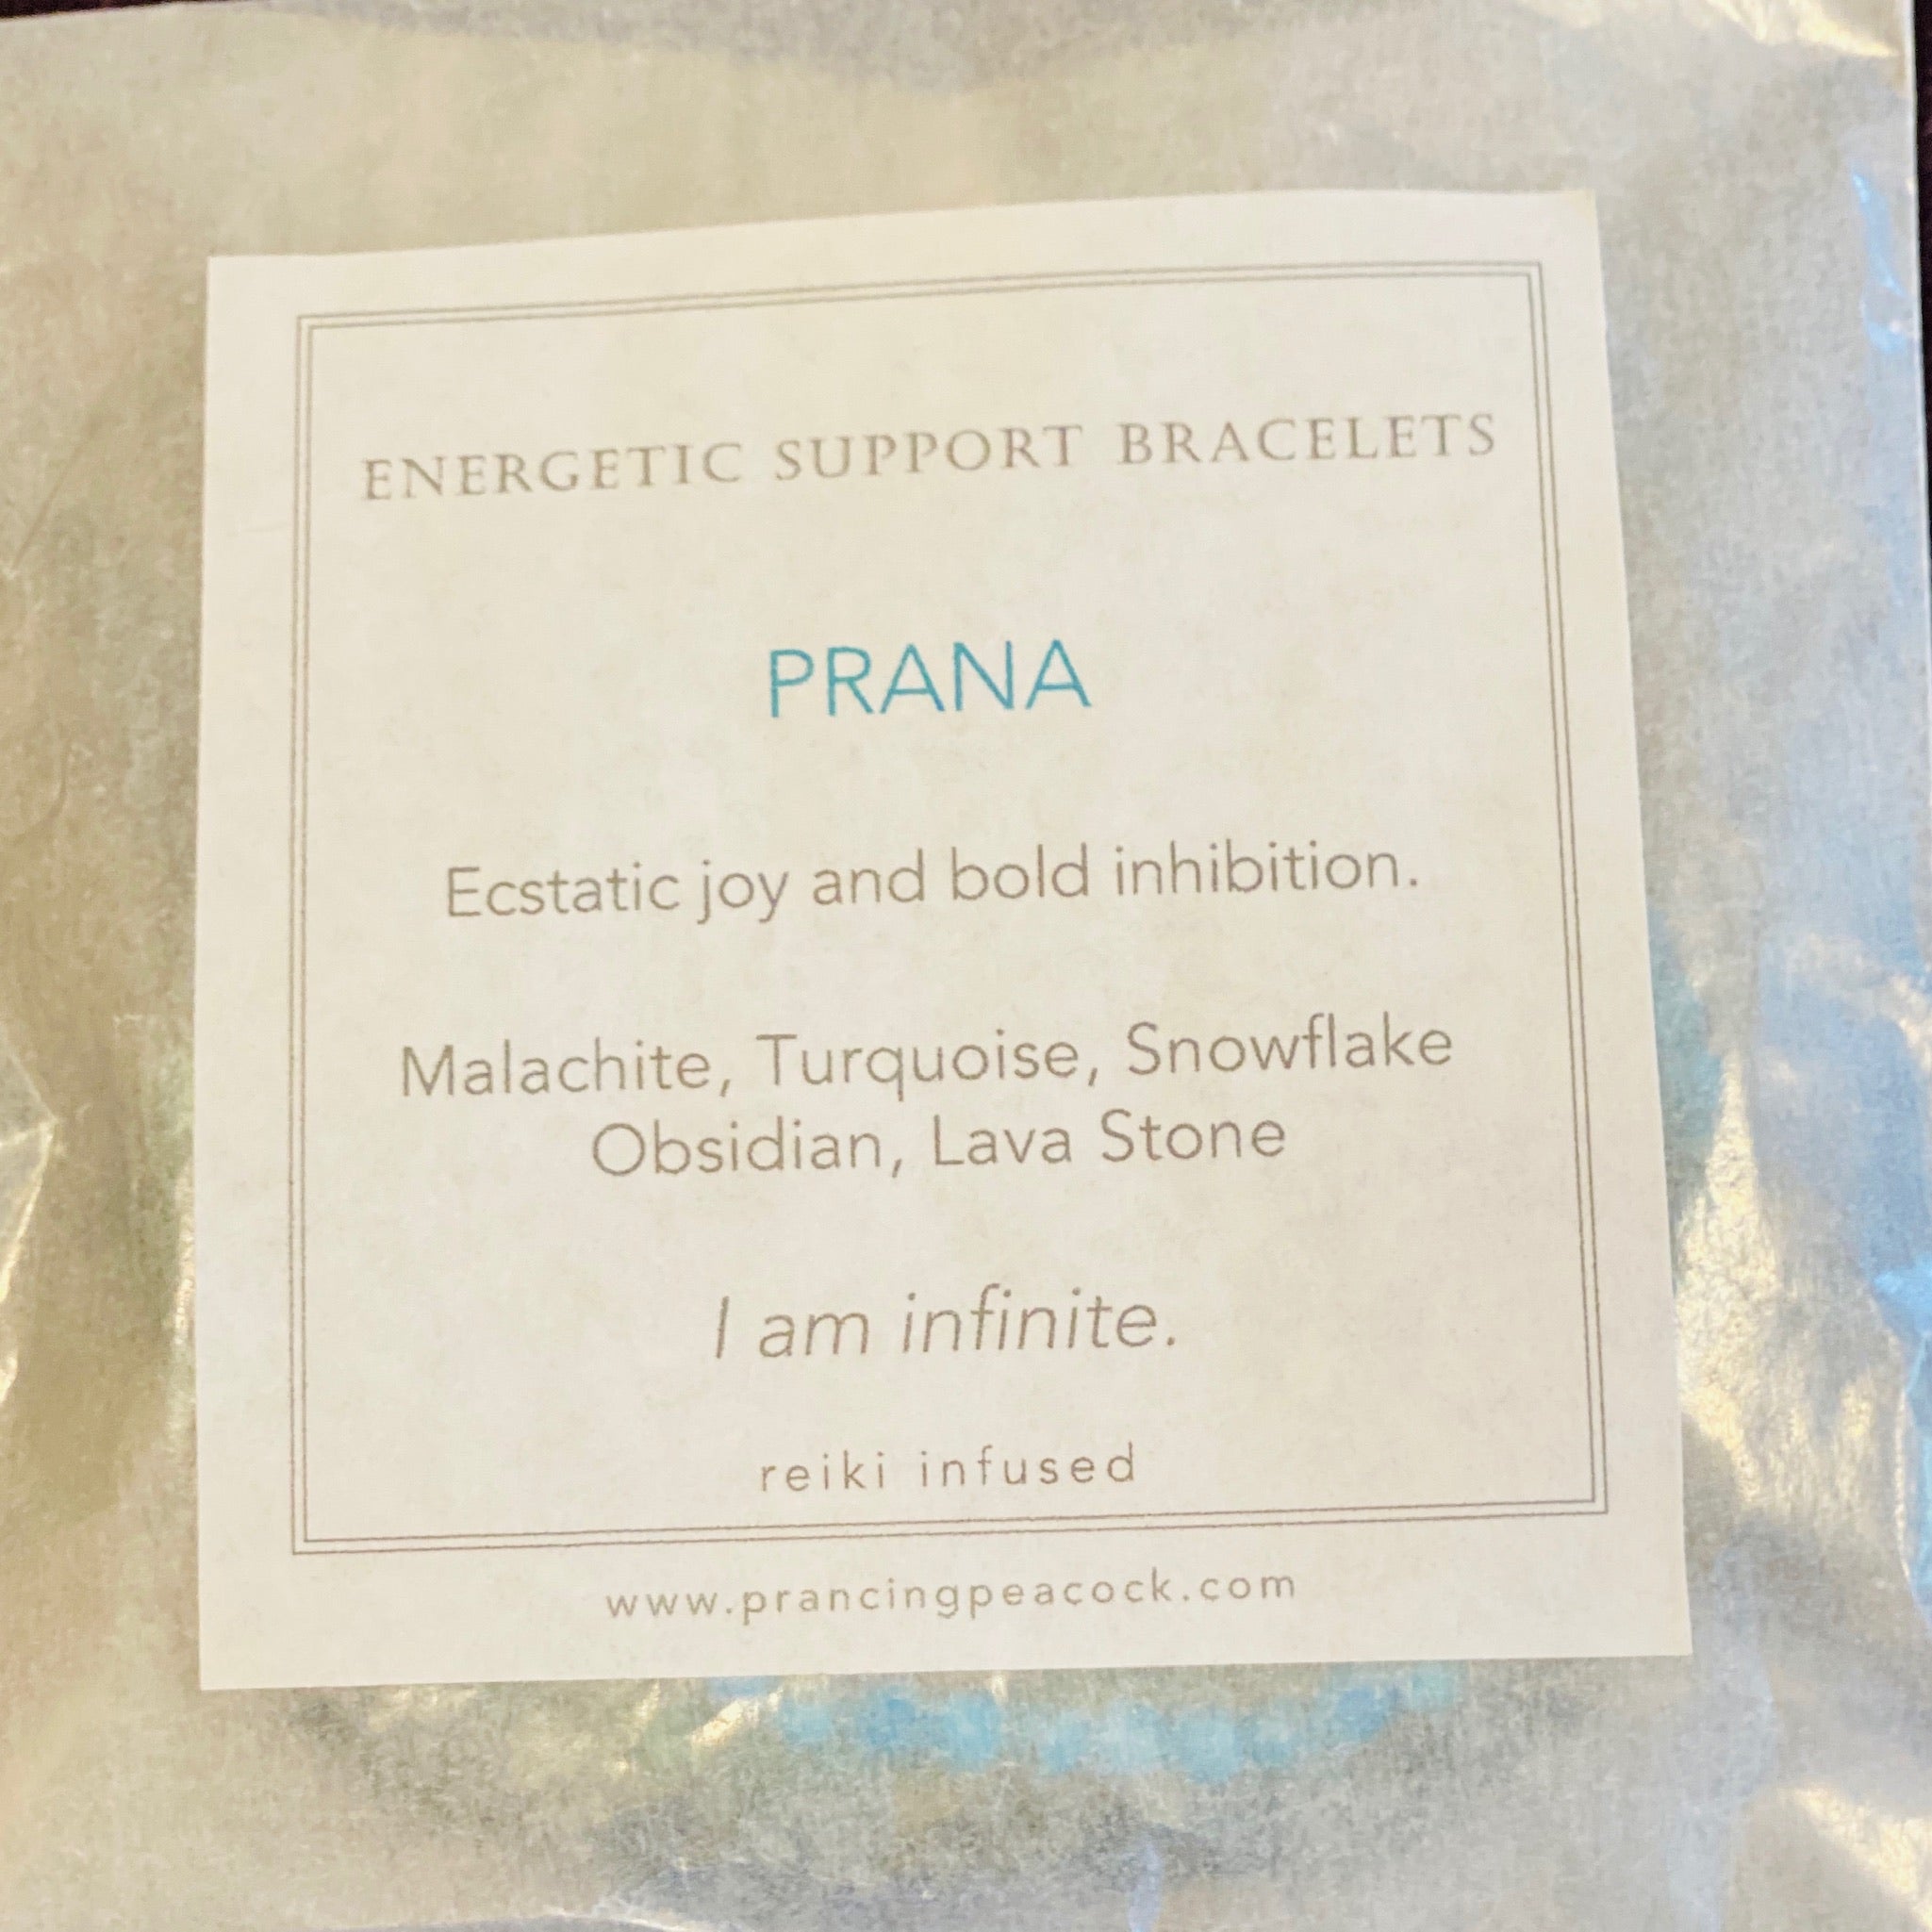 Energetic Support Bracelet: Prana